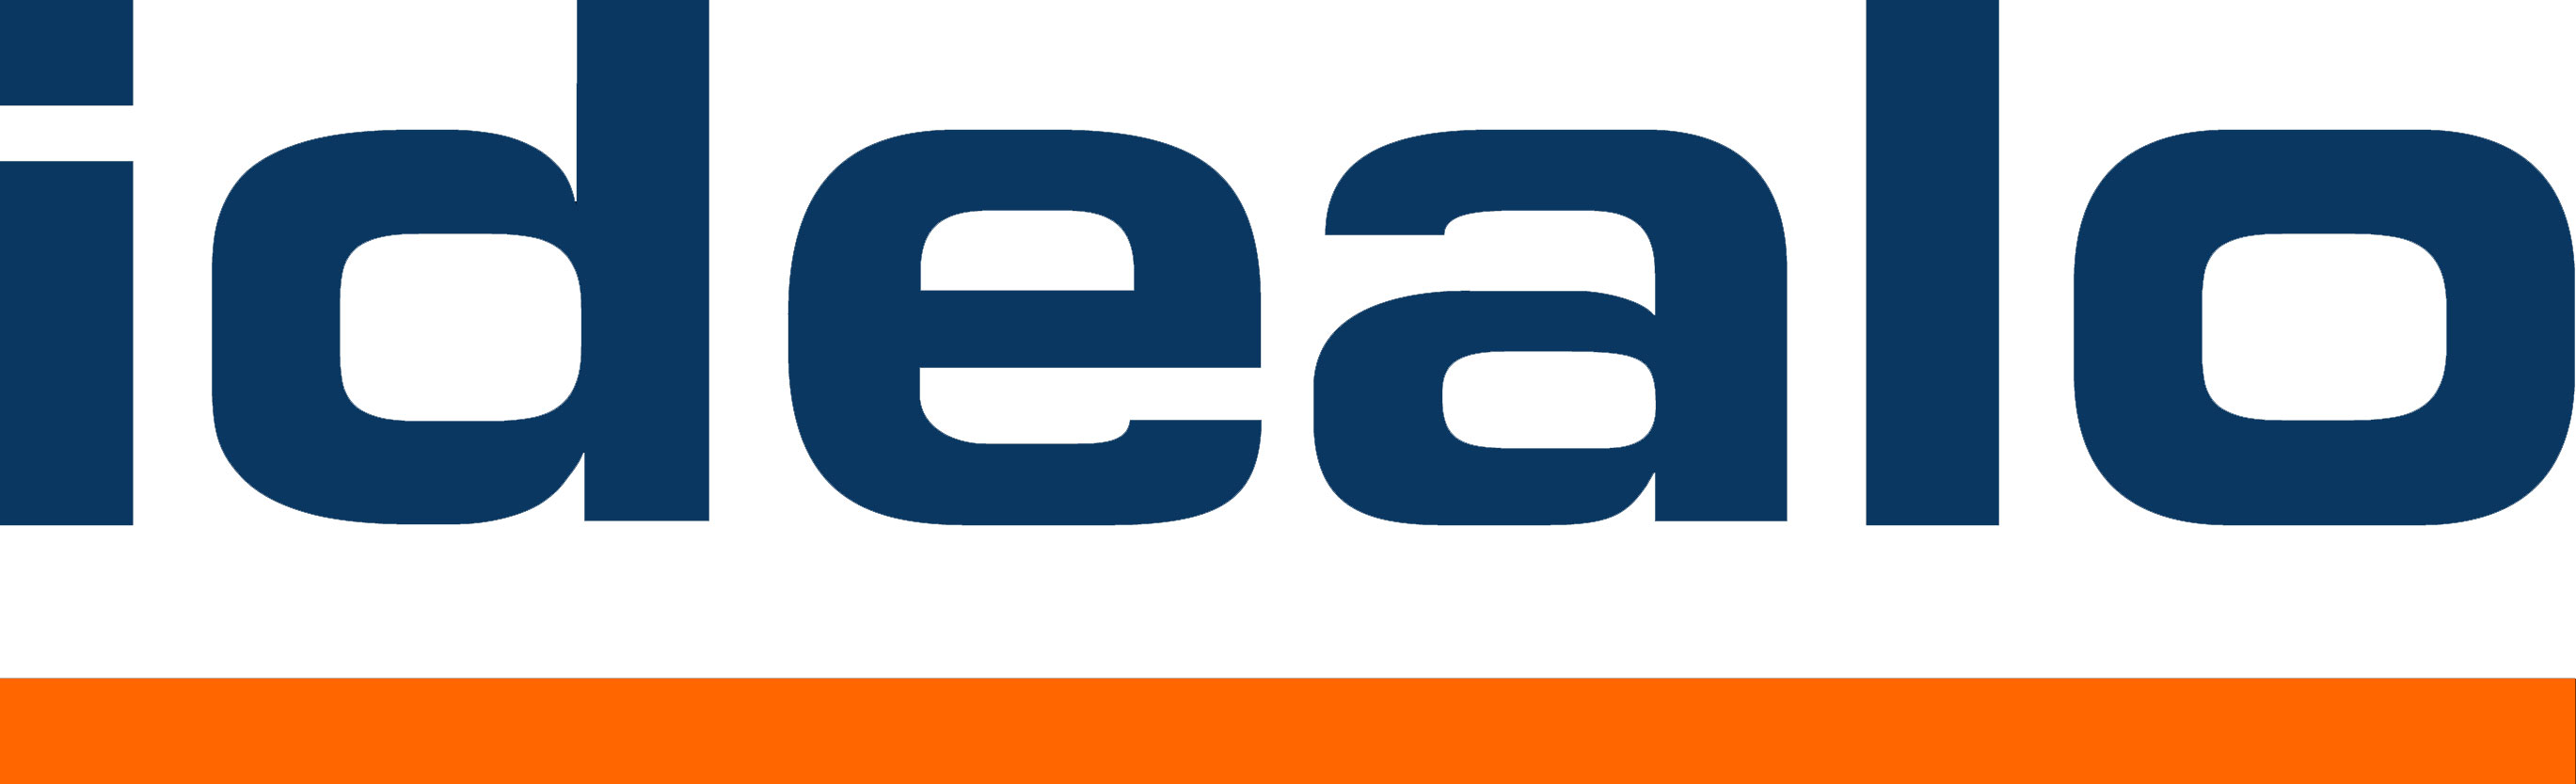 idealo logo